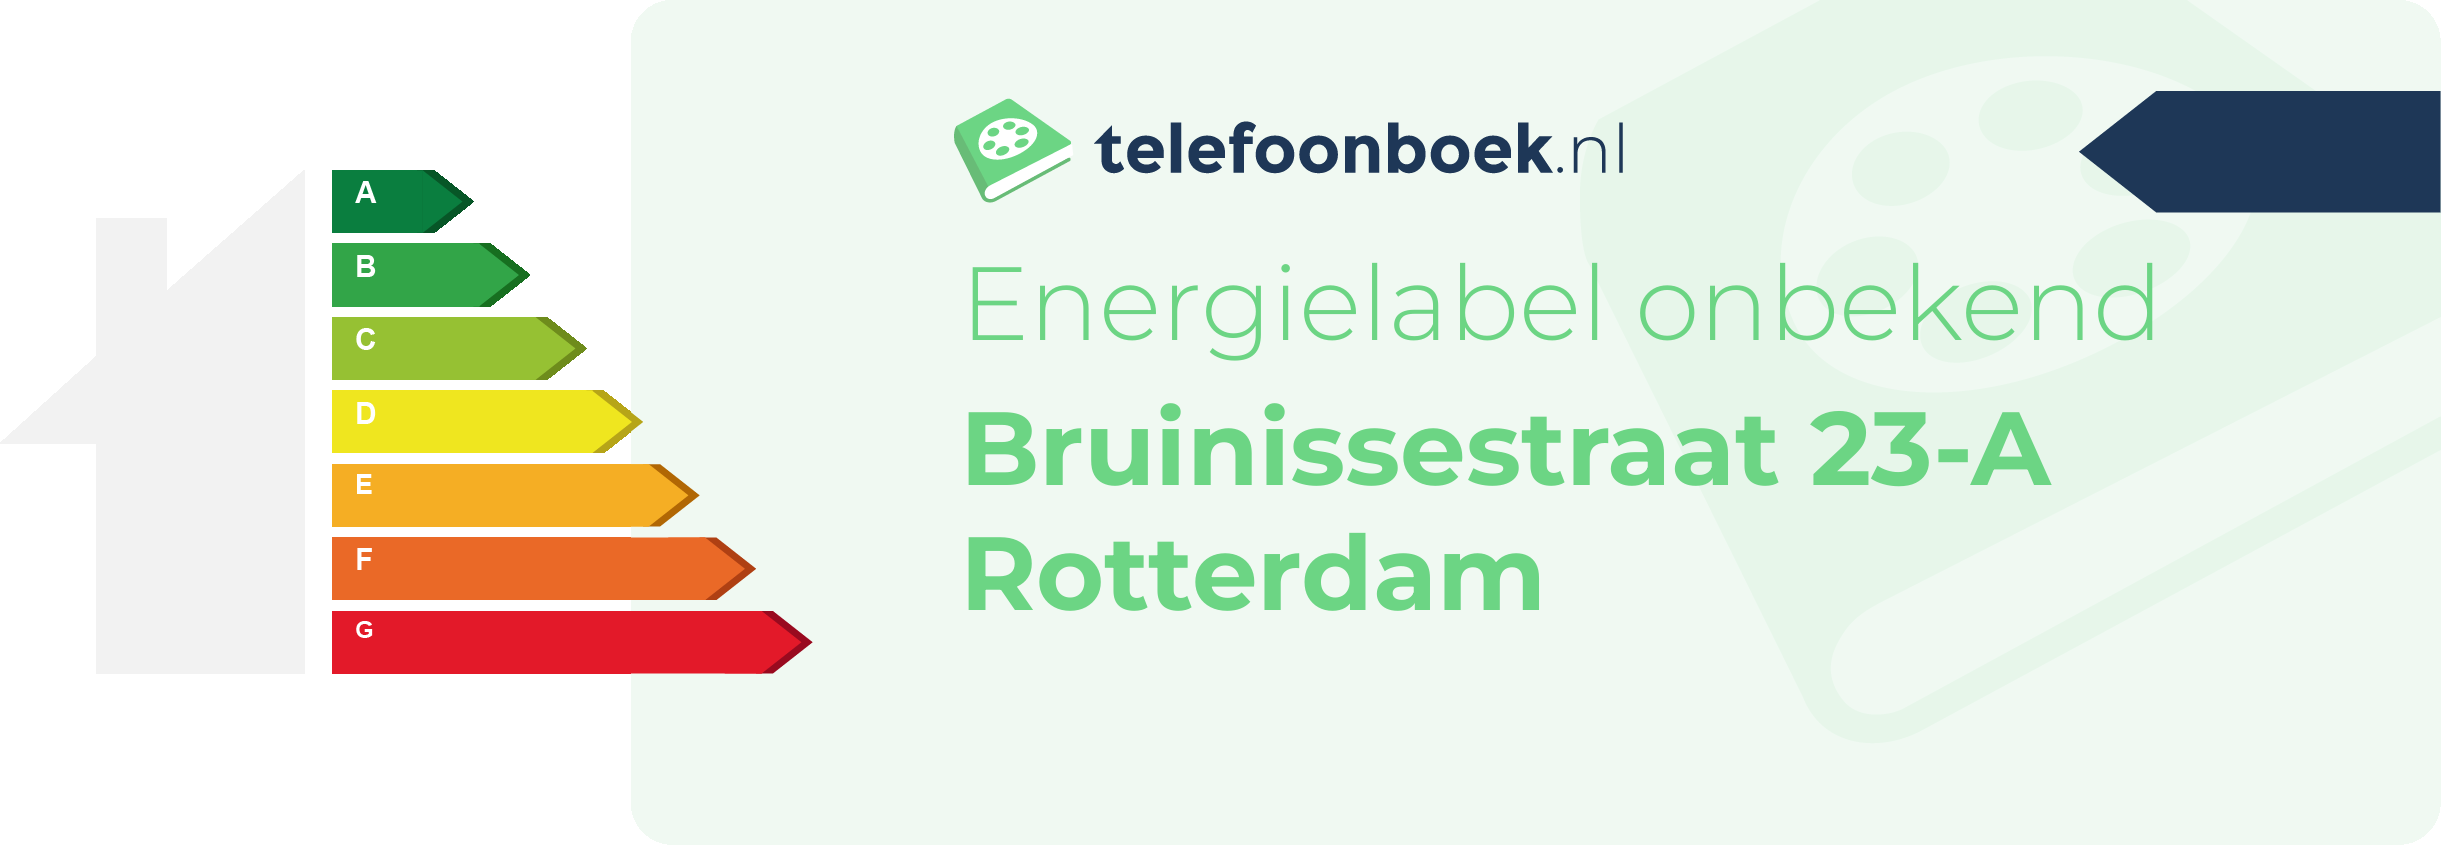 Energielabel Bruinissestraat 23-A Rotterdam